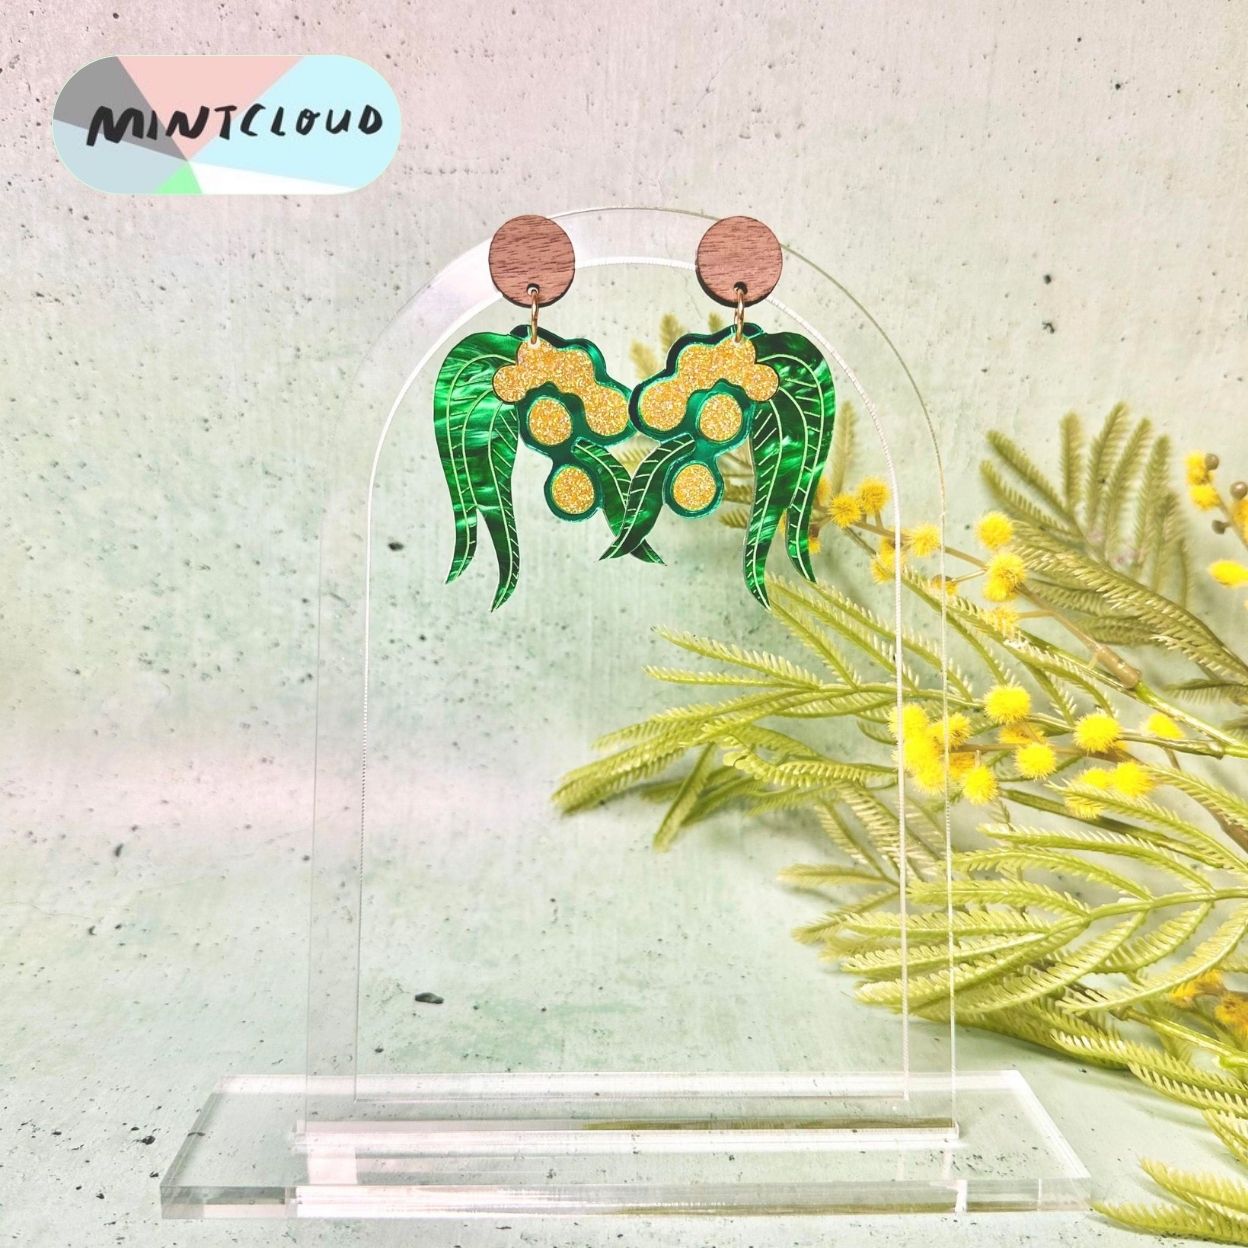 Mintcloud x Little Harlequin Studio Collaboration Earrings - Wattle Dangles Various